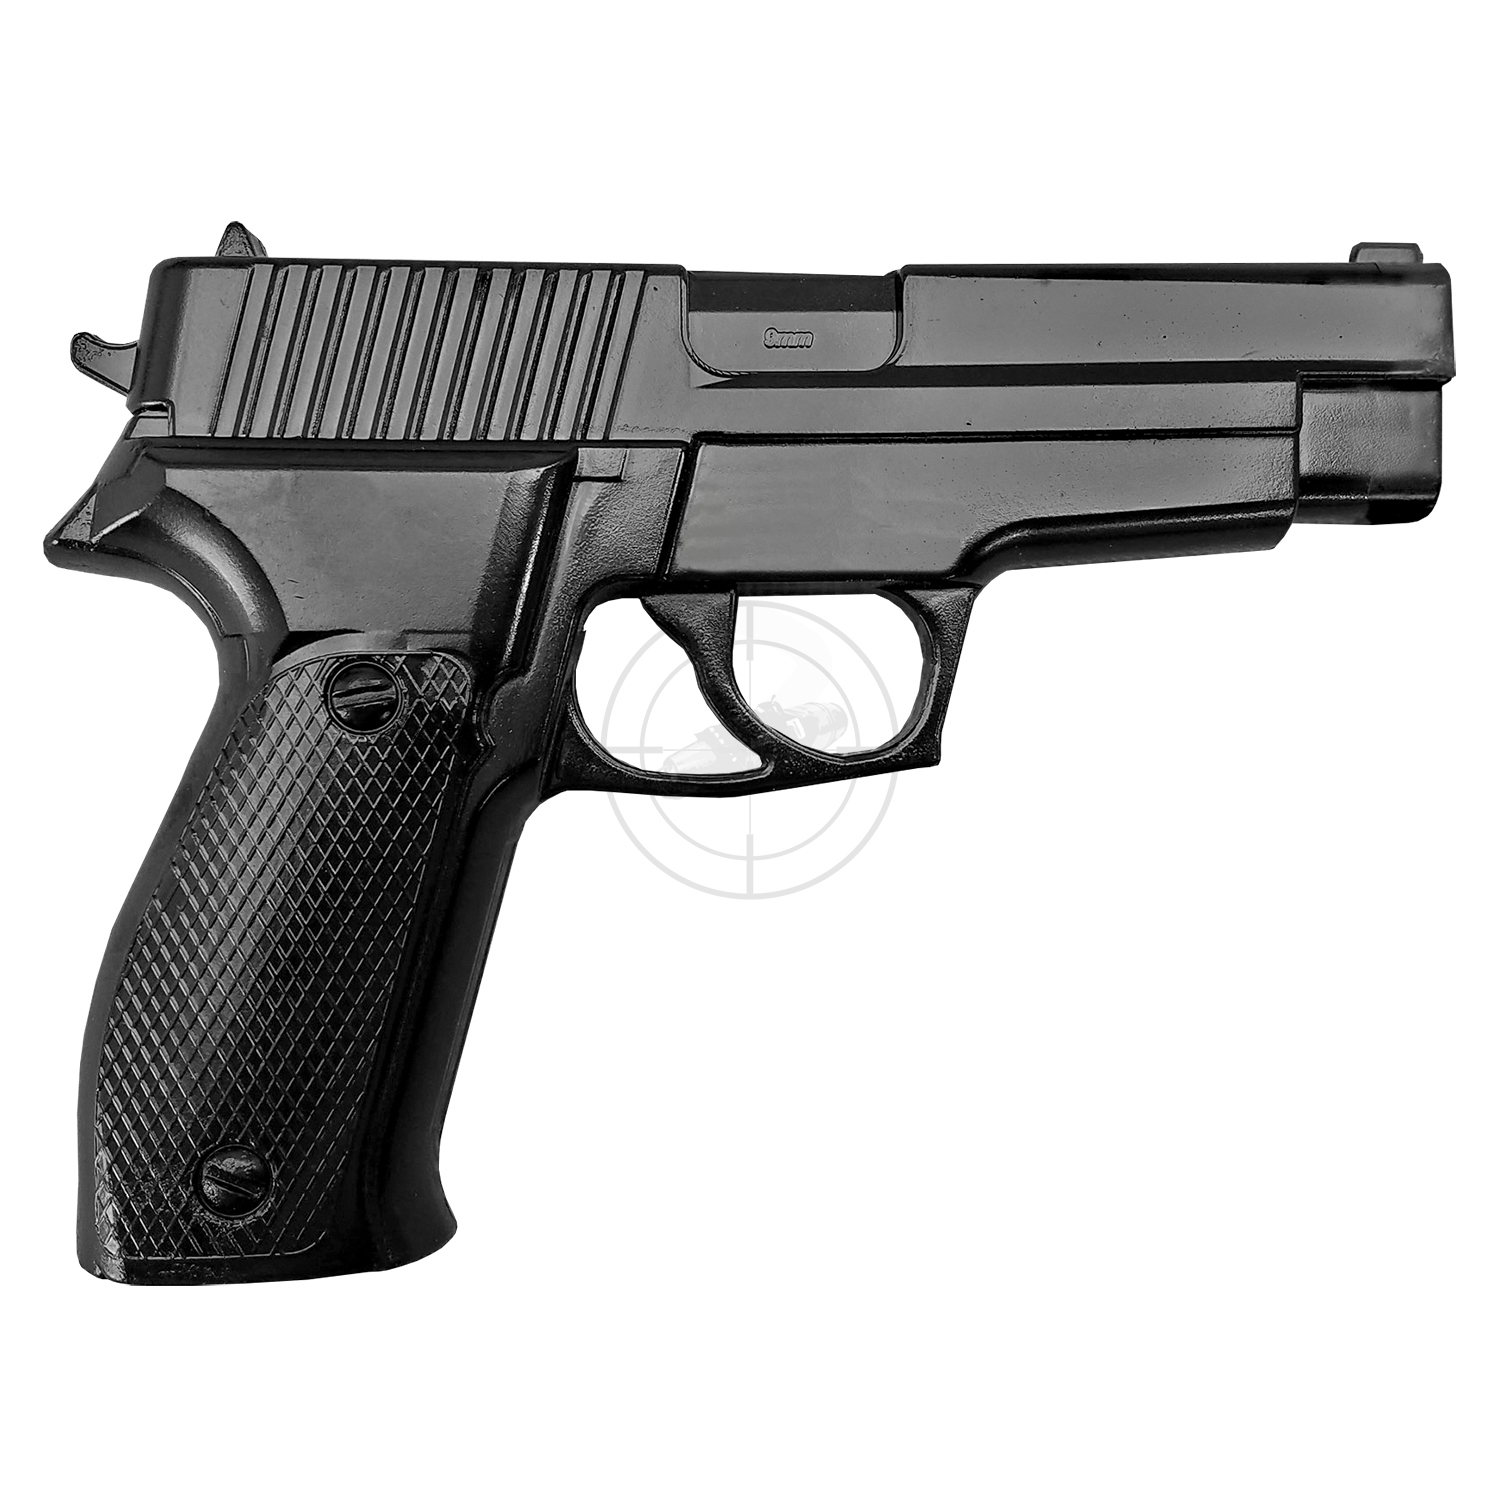 Sig Sauer P226 Réplica Pistola Imagen de archivo - Imagen de pistola,  realista: 244359189